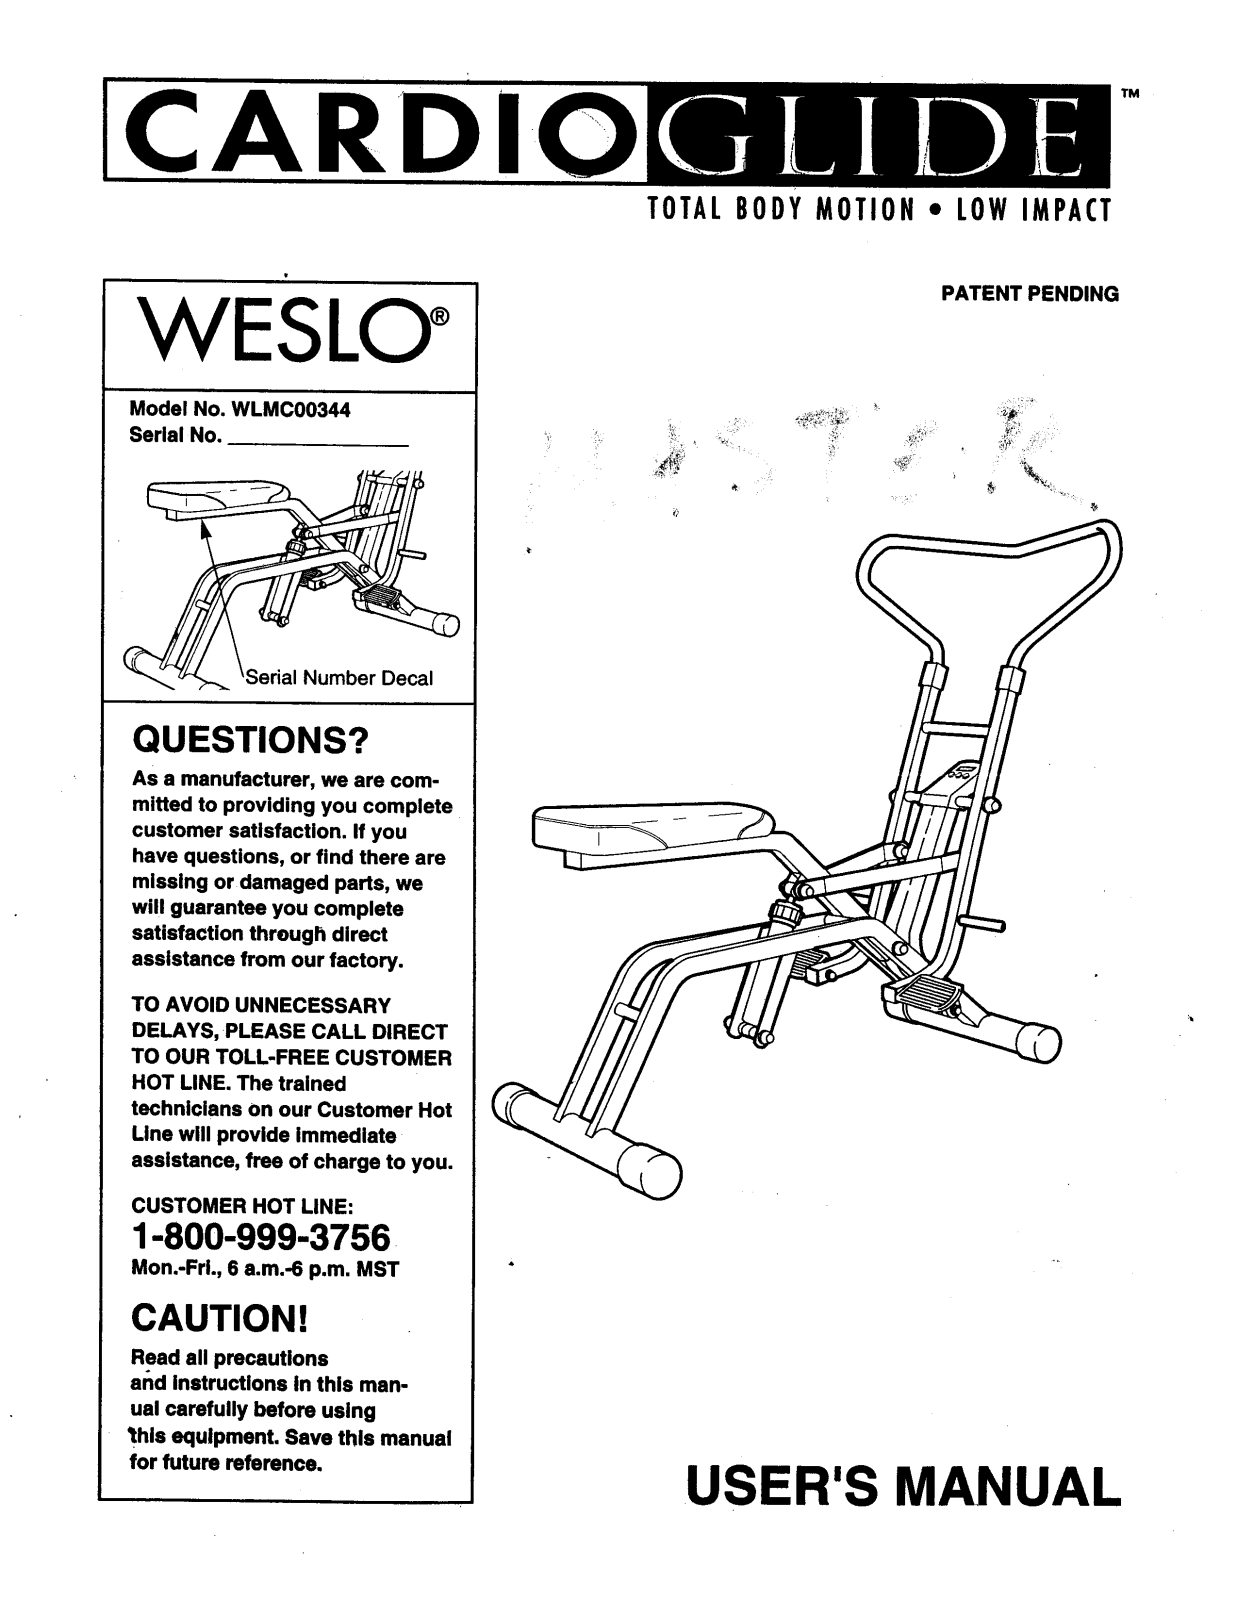 Weslo WLMC00344 User Manual